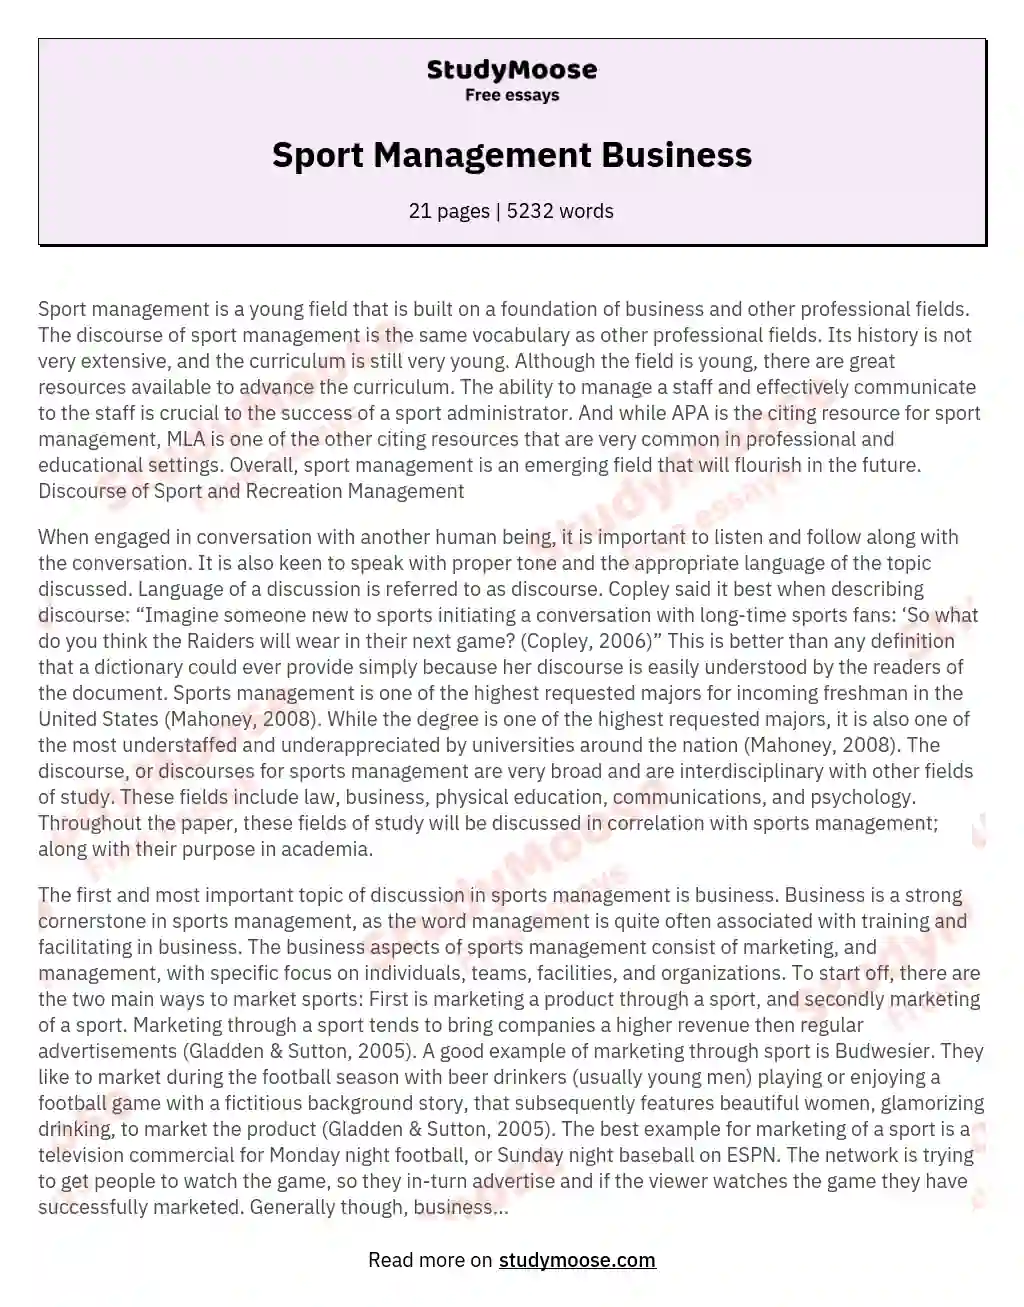 Sport Management Business essay